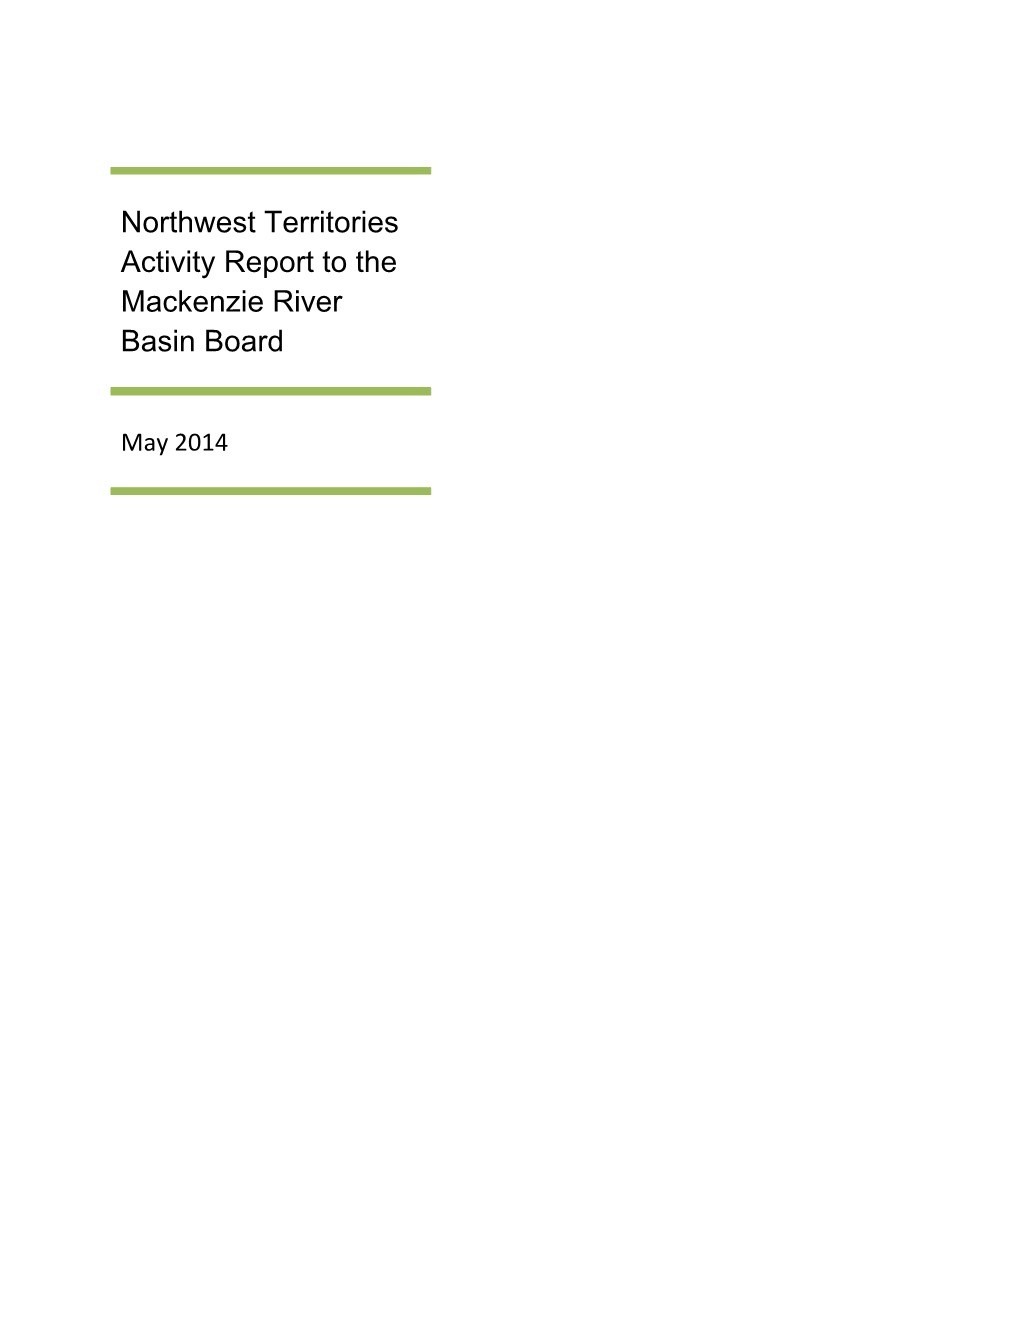 Northwest Territories Activity Report to the Mackenzie River Basin Board